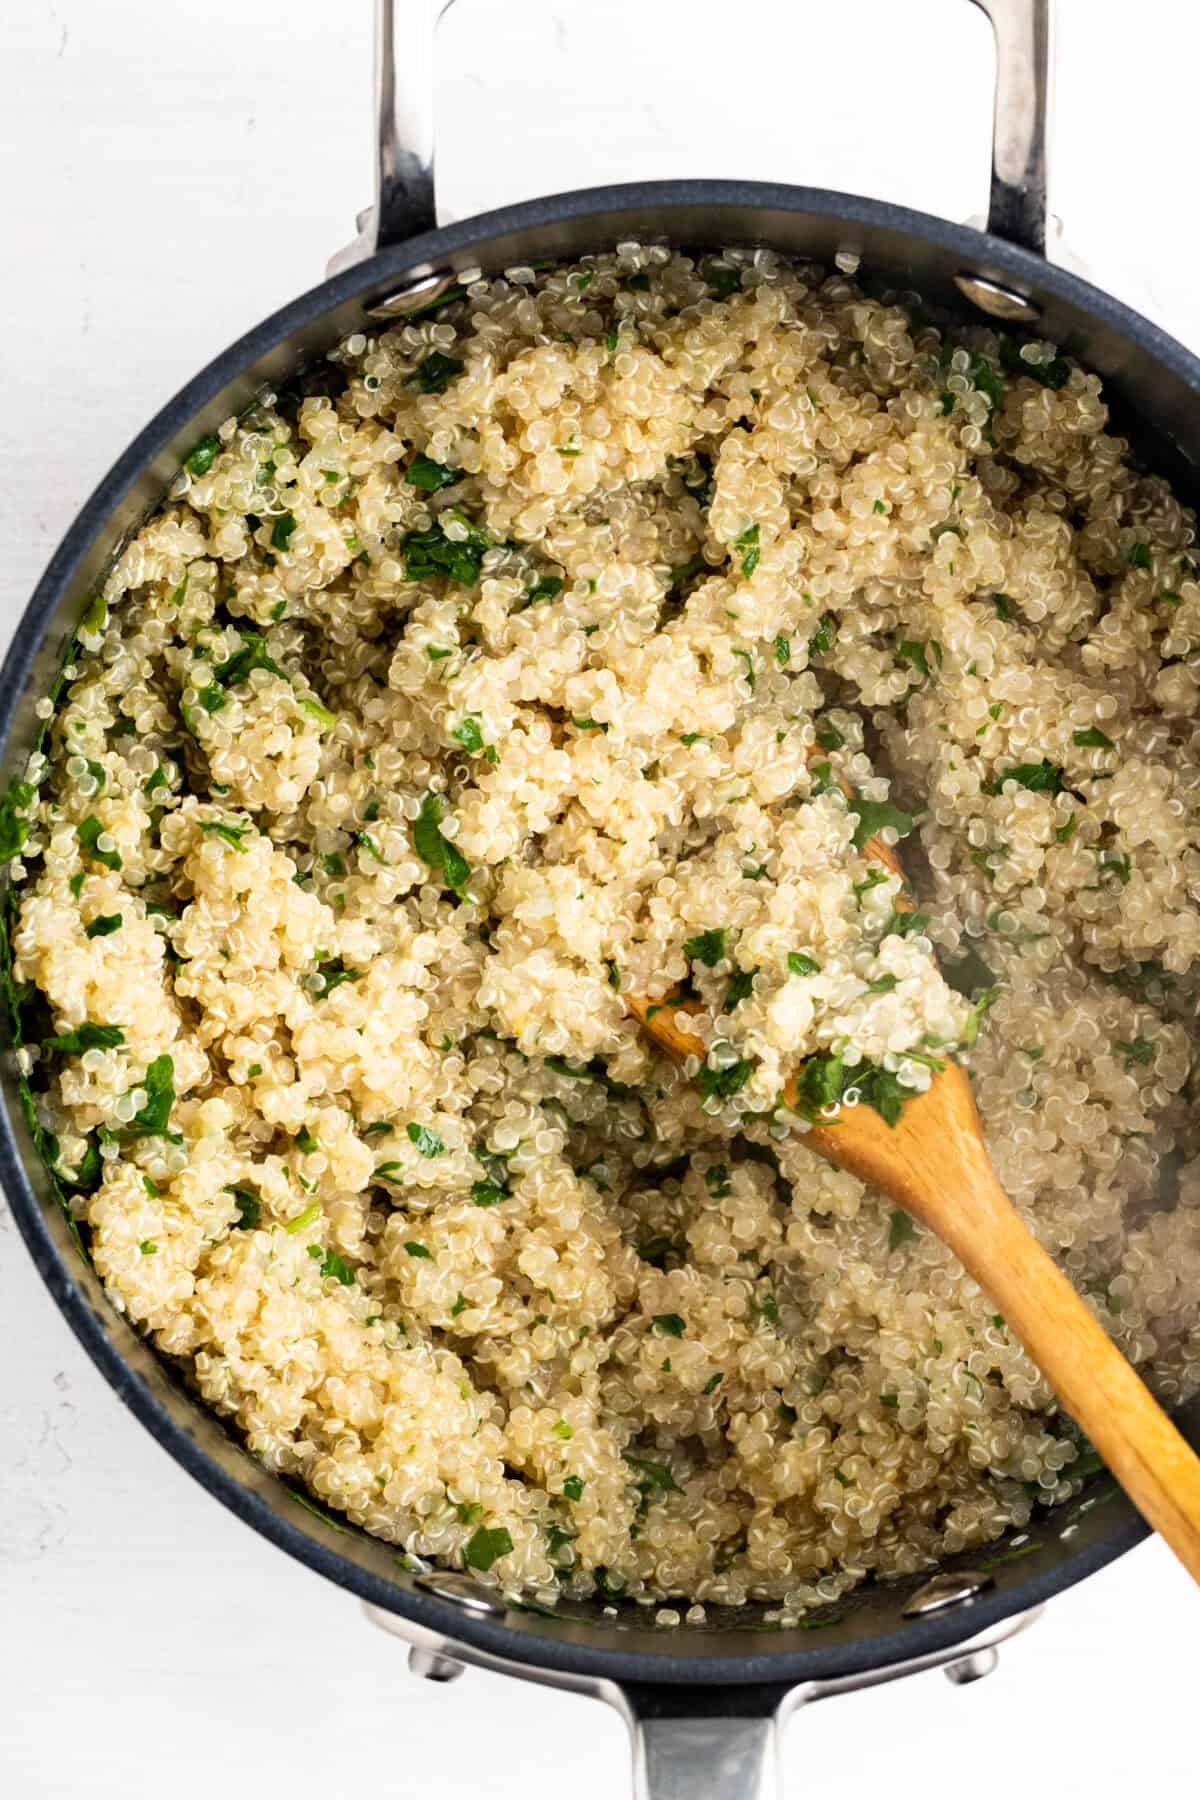 Cooking quinoa in a dark pan.